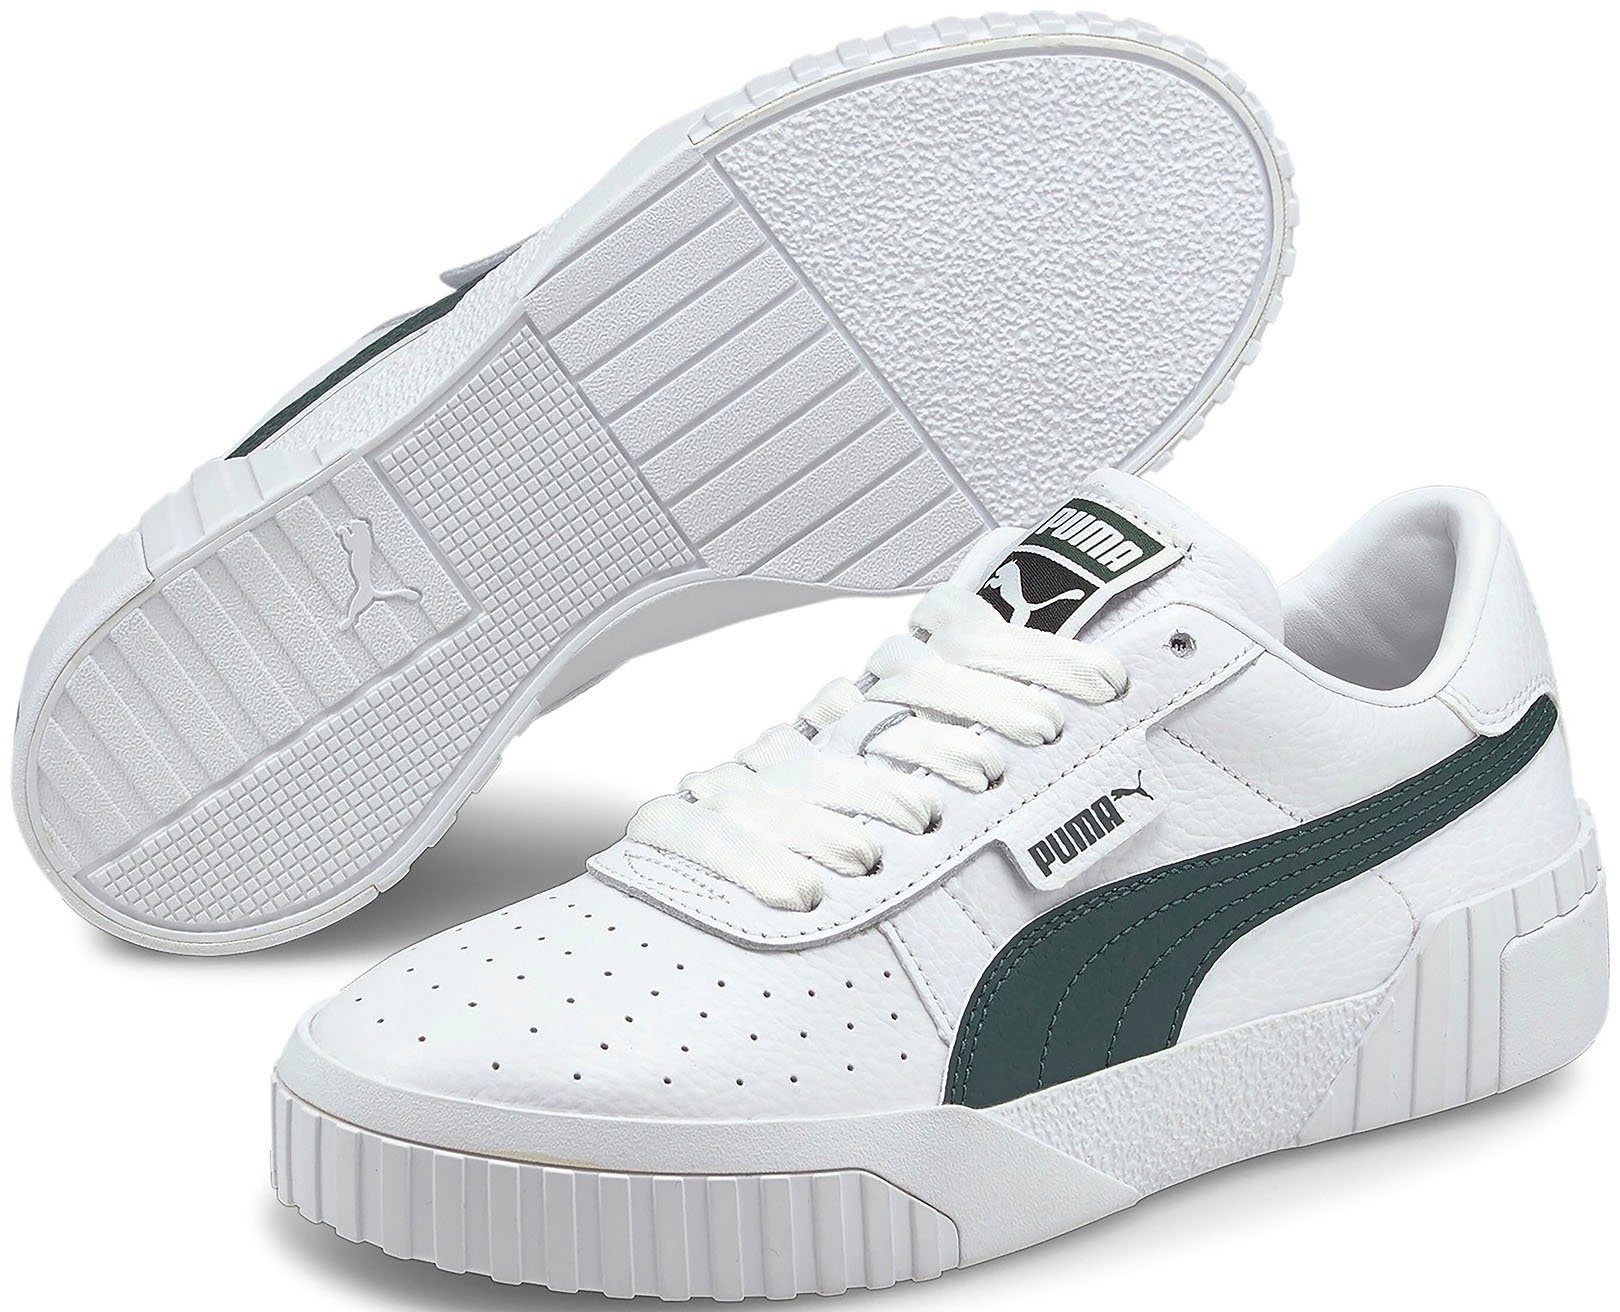 Puma cali shoes - utilize.aimerangers2020.fr